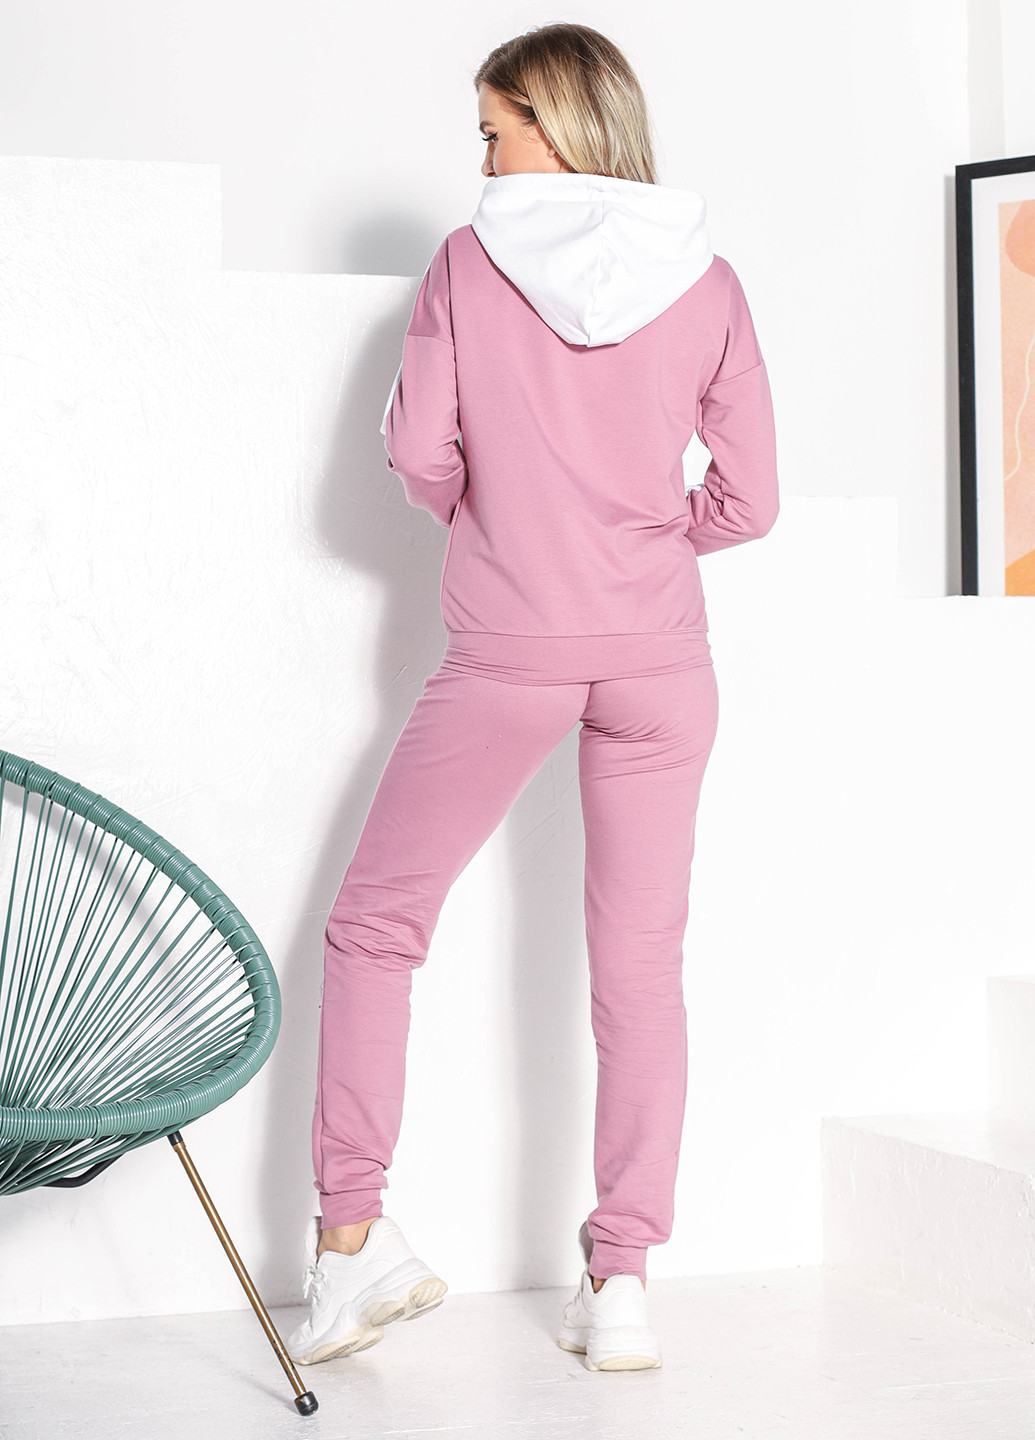 Костюм (толстовка, брюки) Demma логотип розовый спортивный хлопок, трикотаж